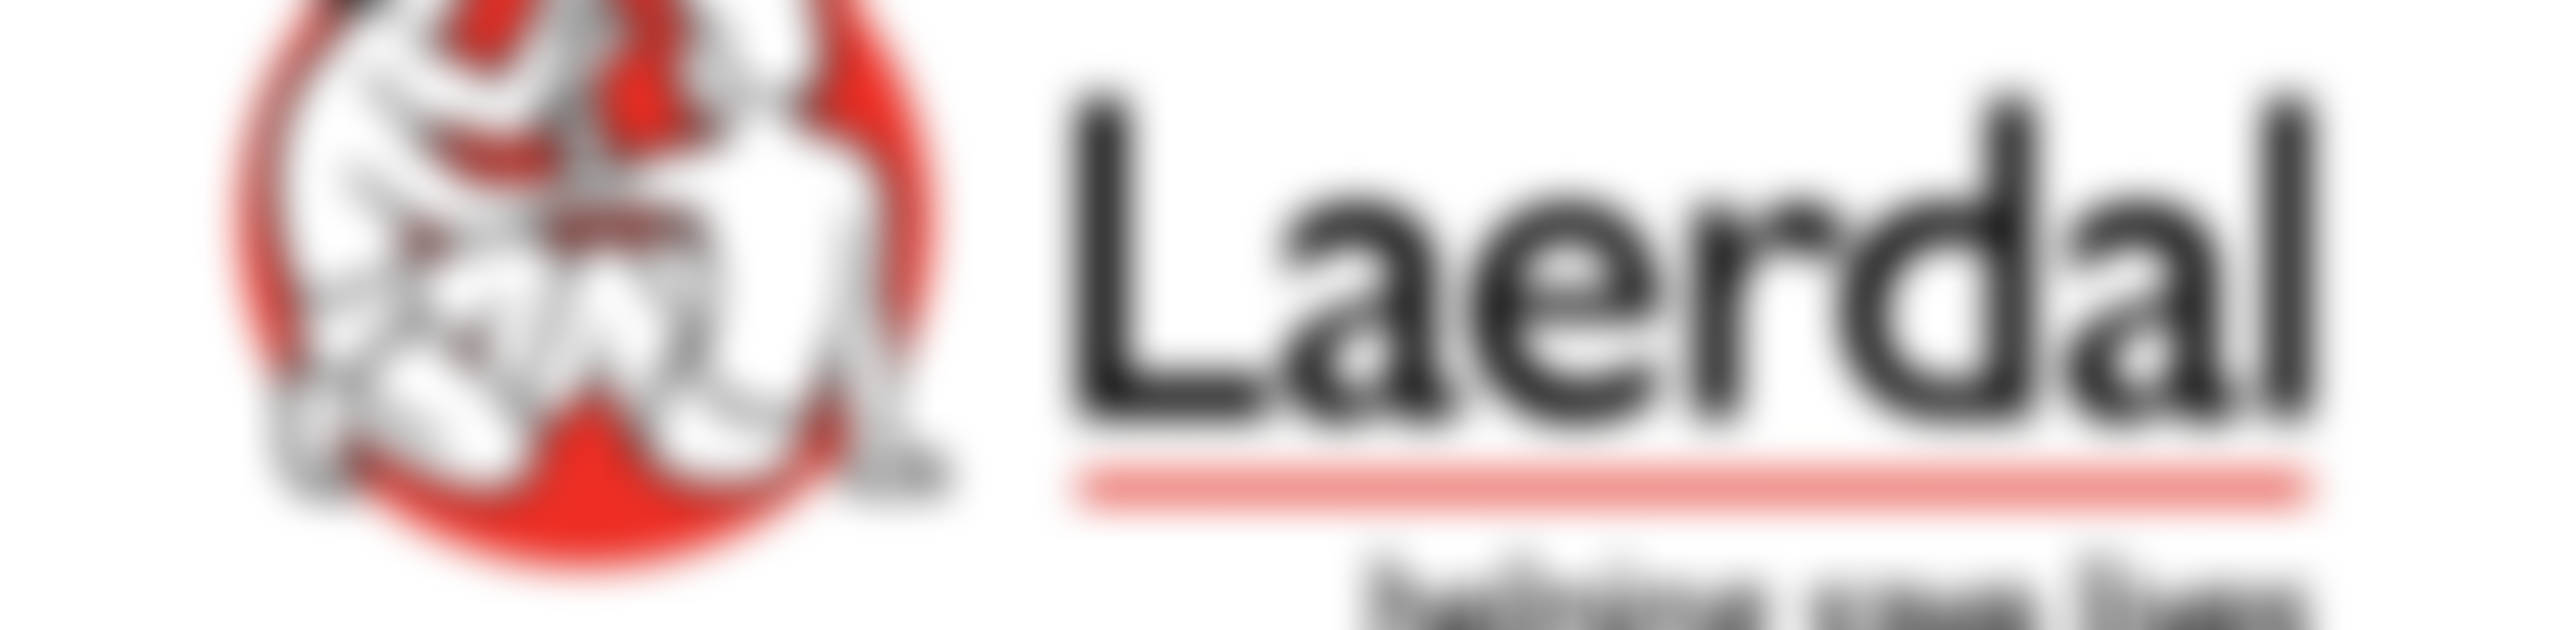 Lead Service Designer - Laerdal Medical